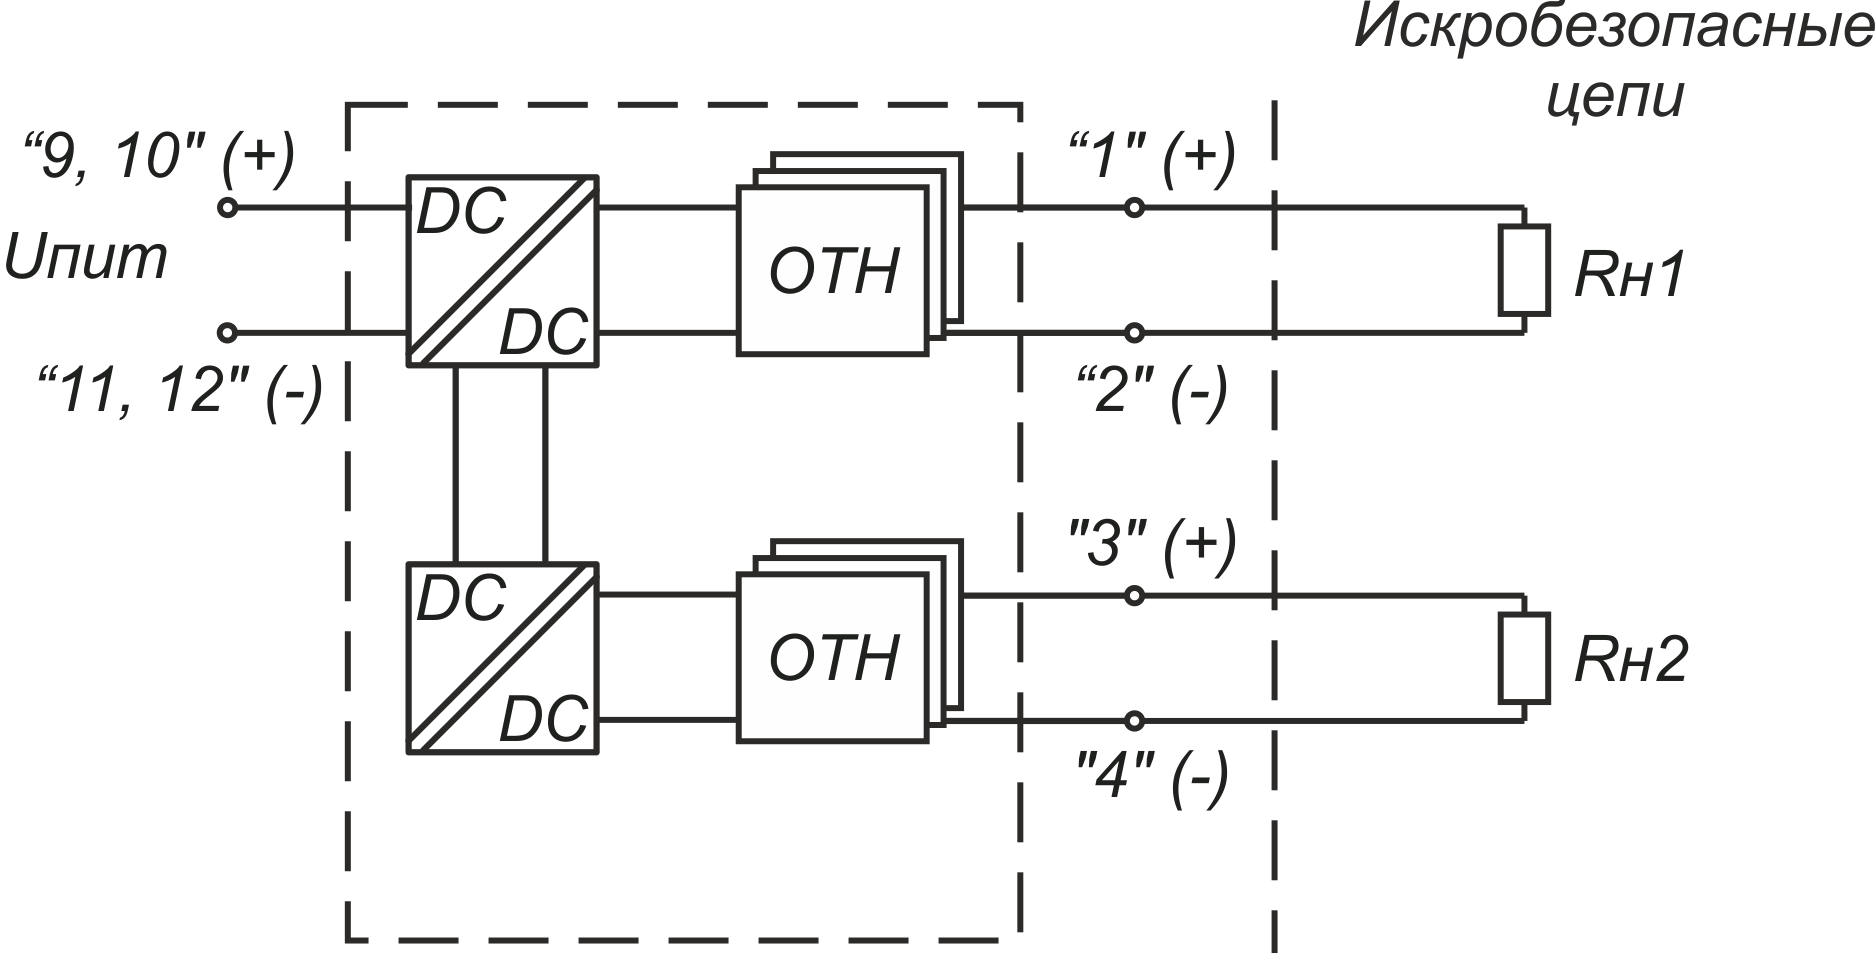 ЛПА-200 Схема подключения нагрузки (2 канала)